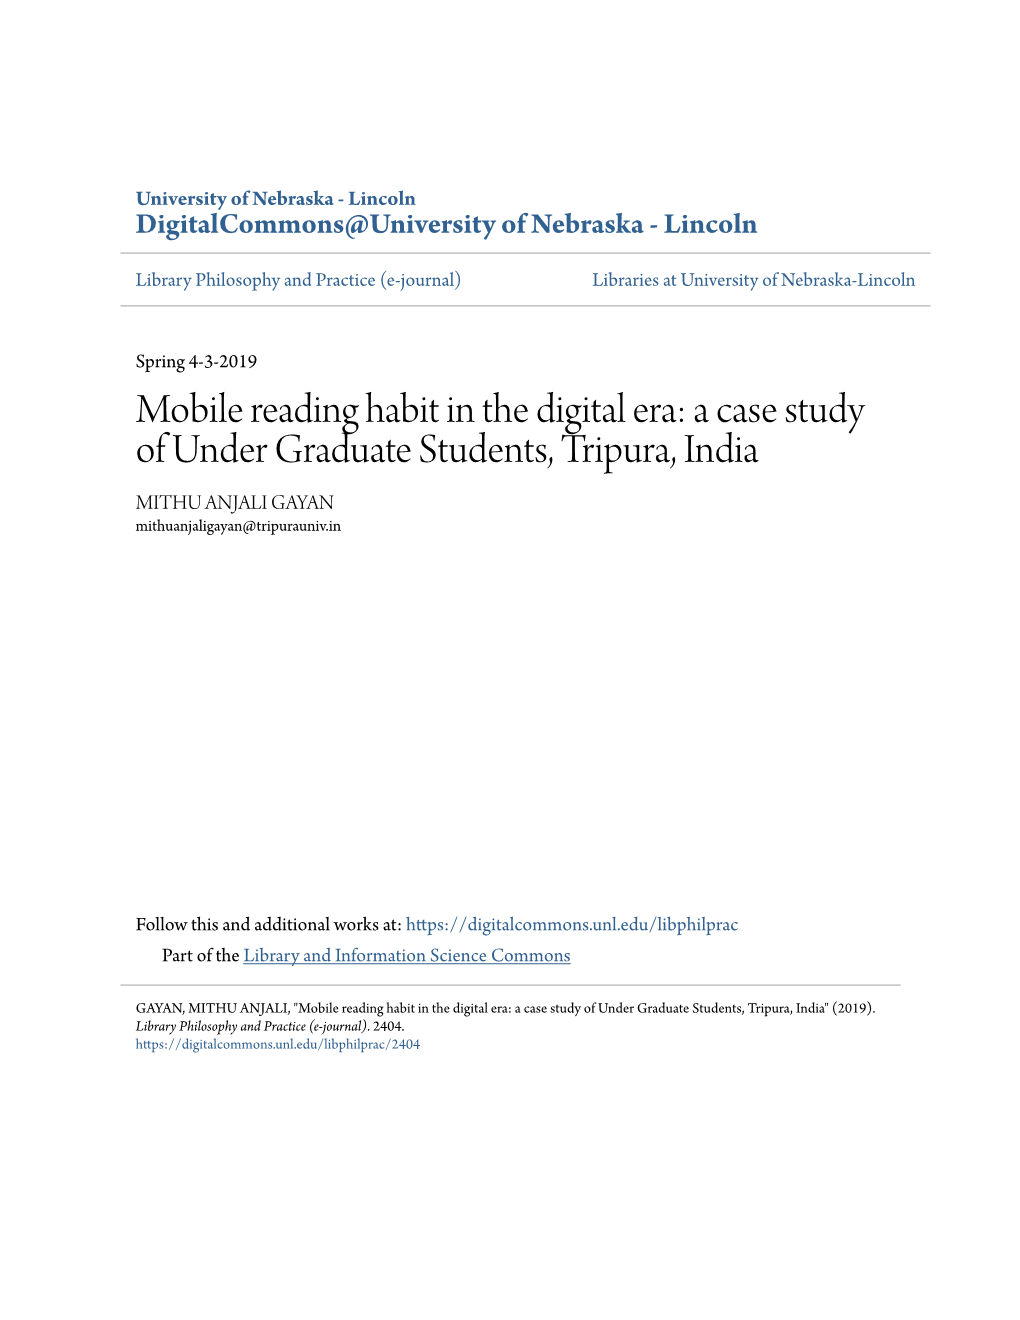 Mobile Reading Habit in the Digital Era: a Case Study of Under Graduate Students, Tripura, India MITHU ANJALI GAYAN Mithuanjaligayan@Tripurauniv.In